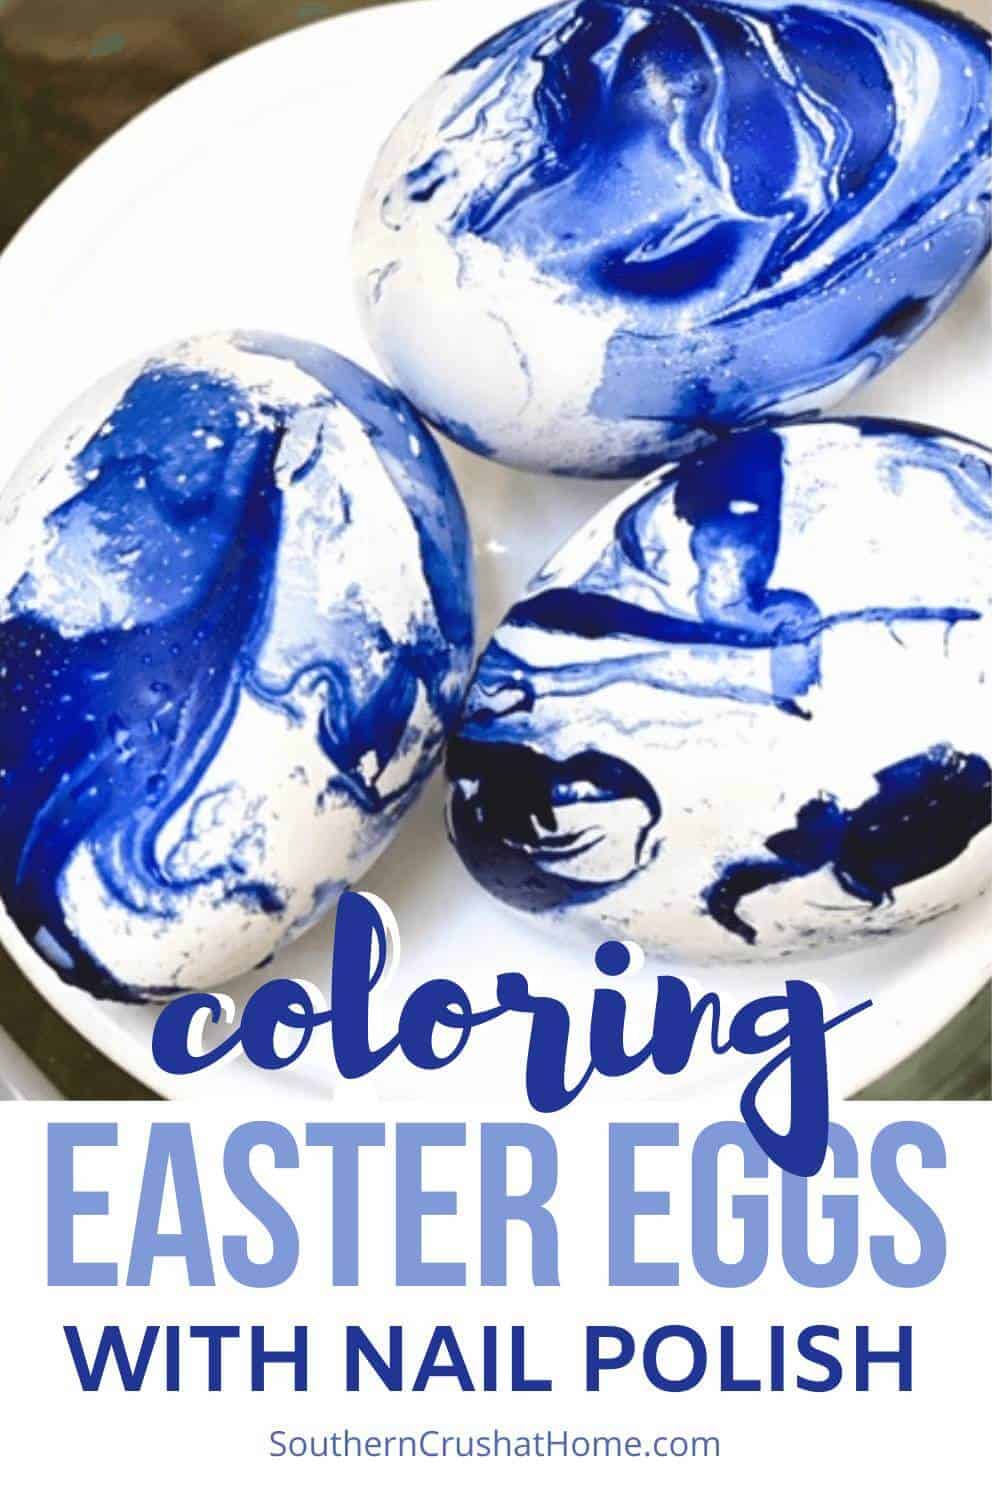 Coloring Easter Eggs with Nail Polish Pin